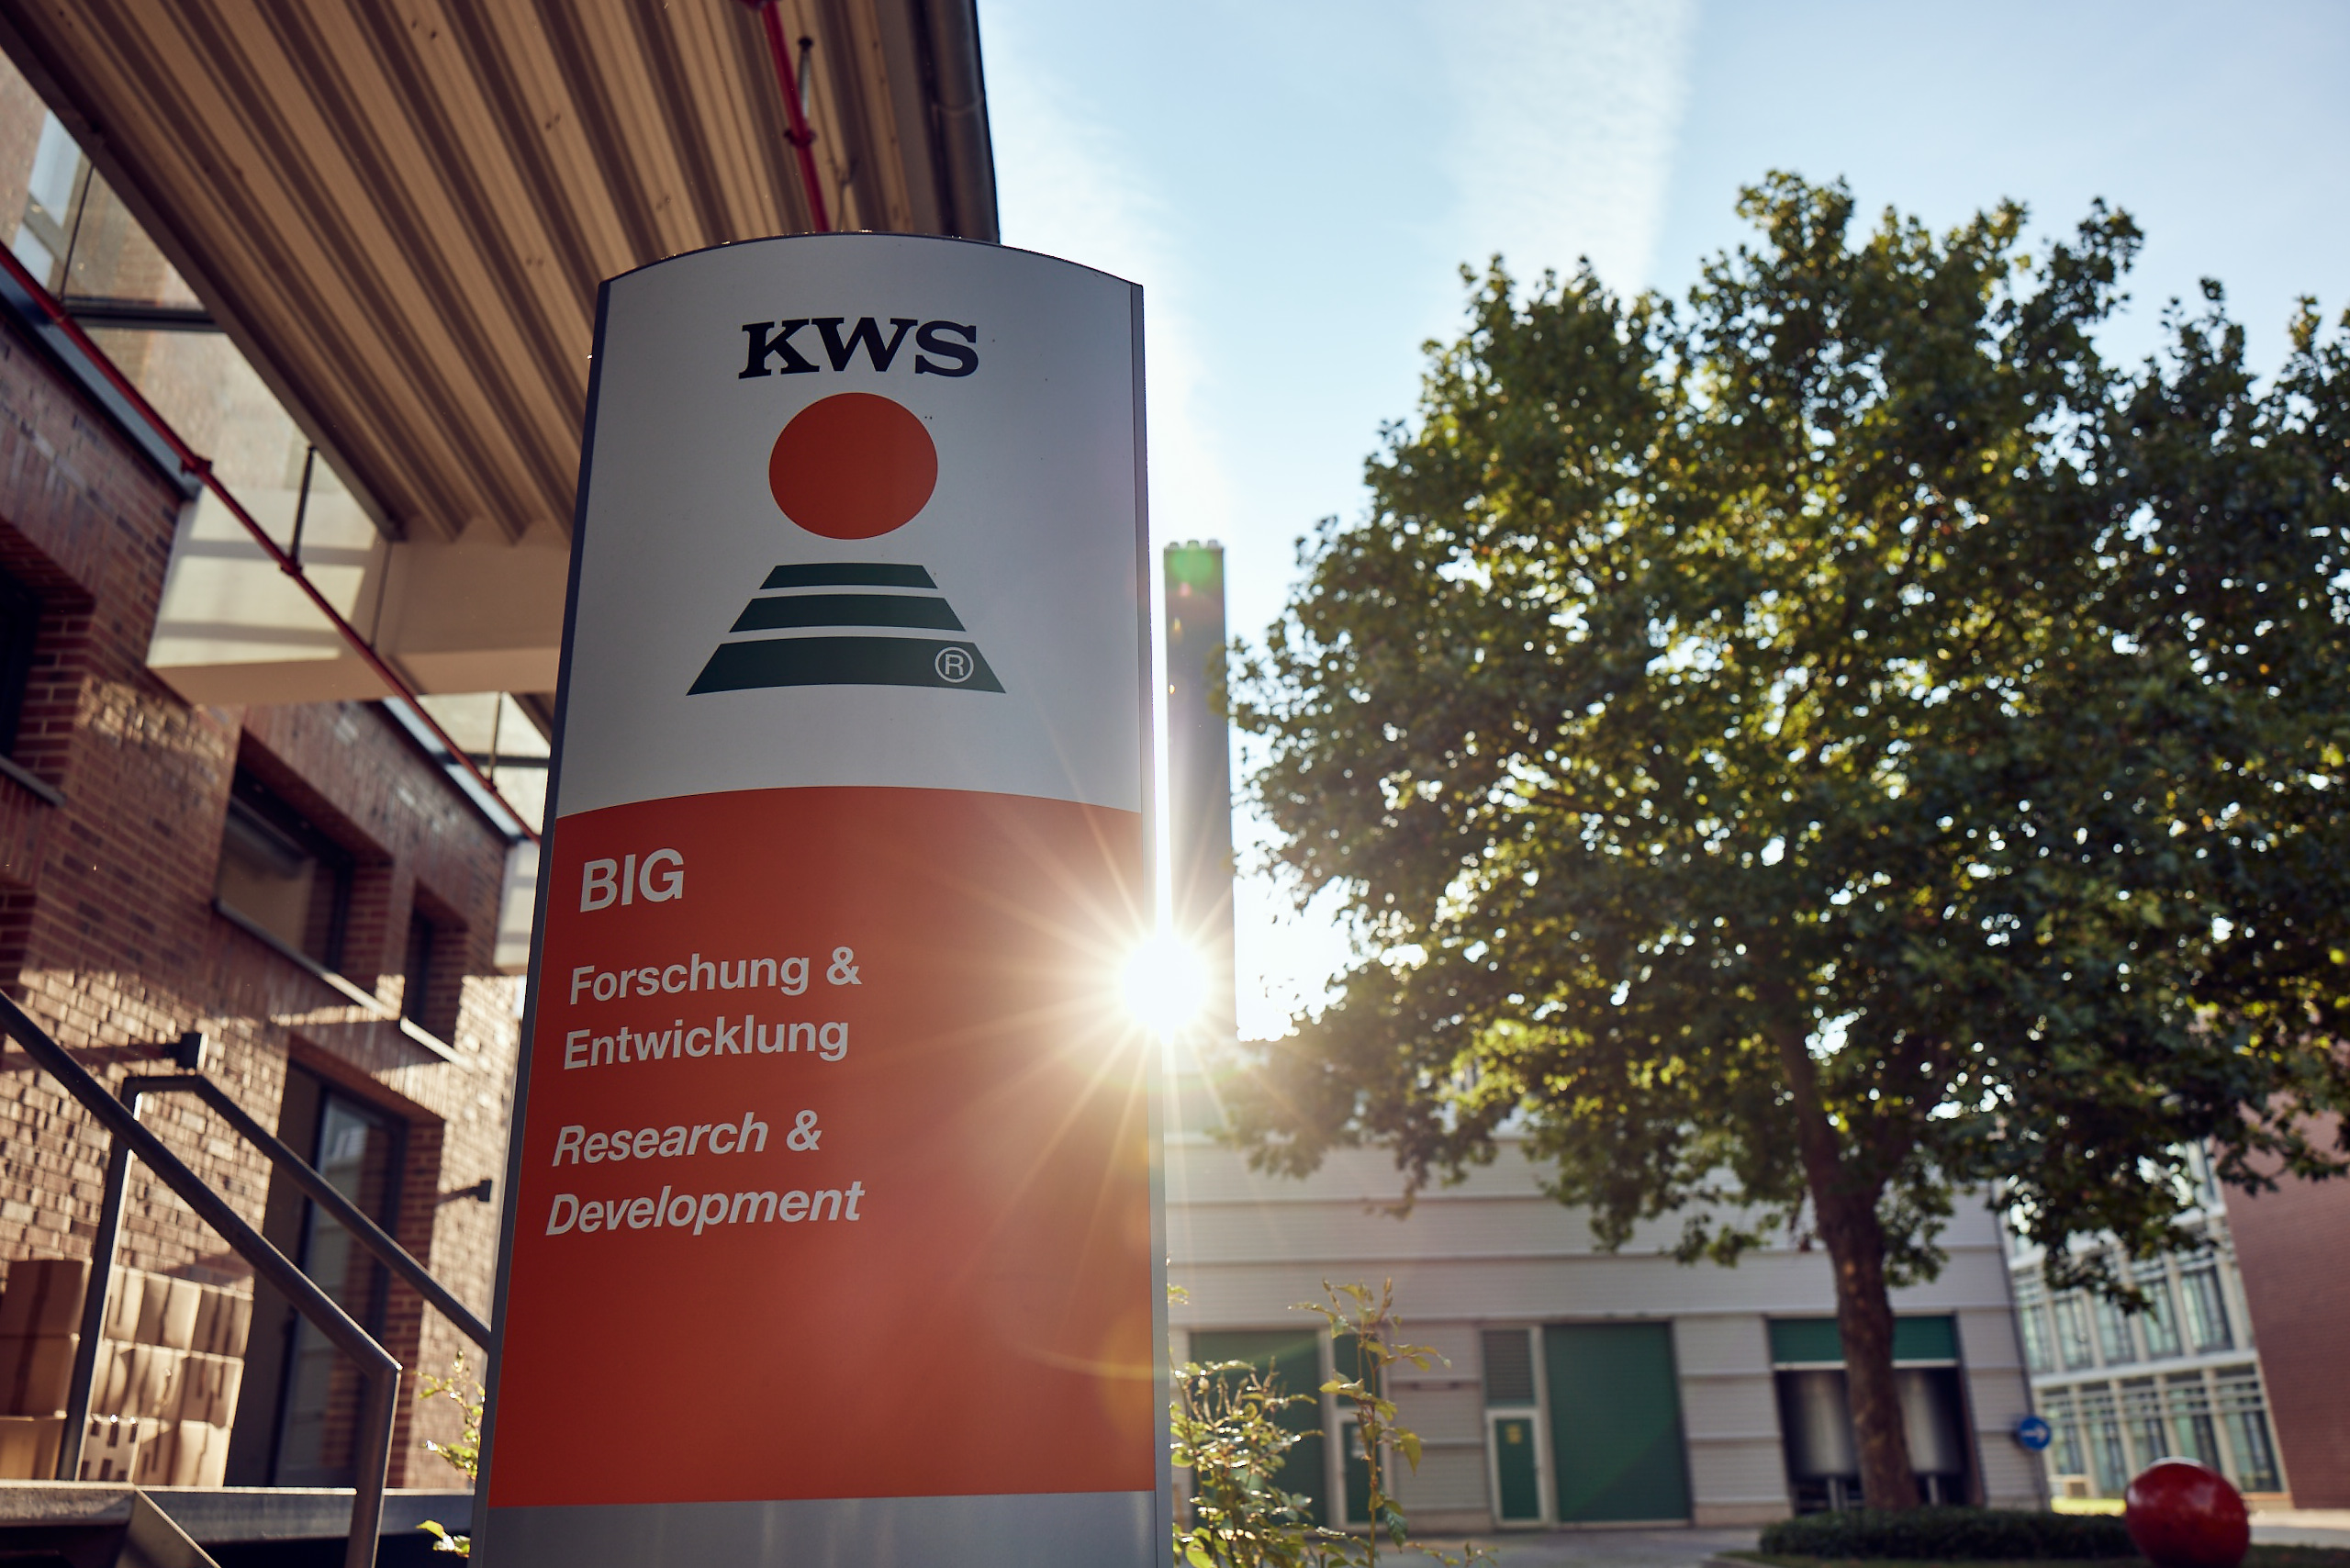 kws0920_kws-logo-pillar-campus-einbeck_006-(1).jpg